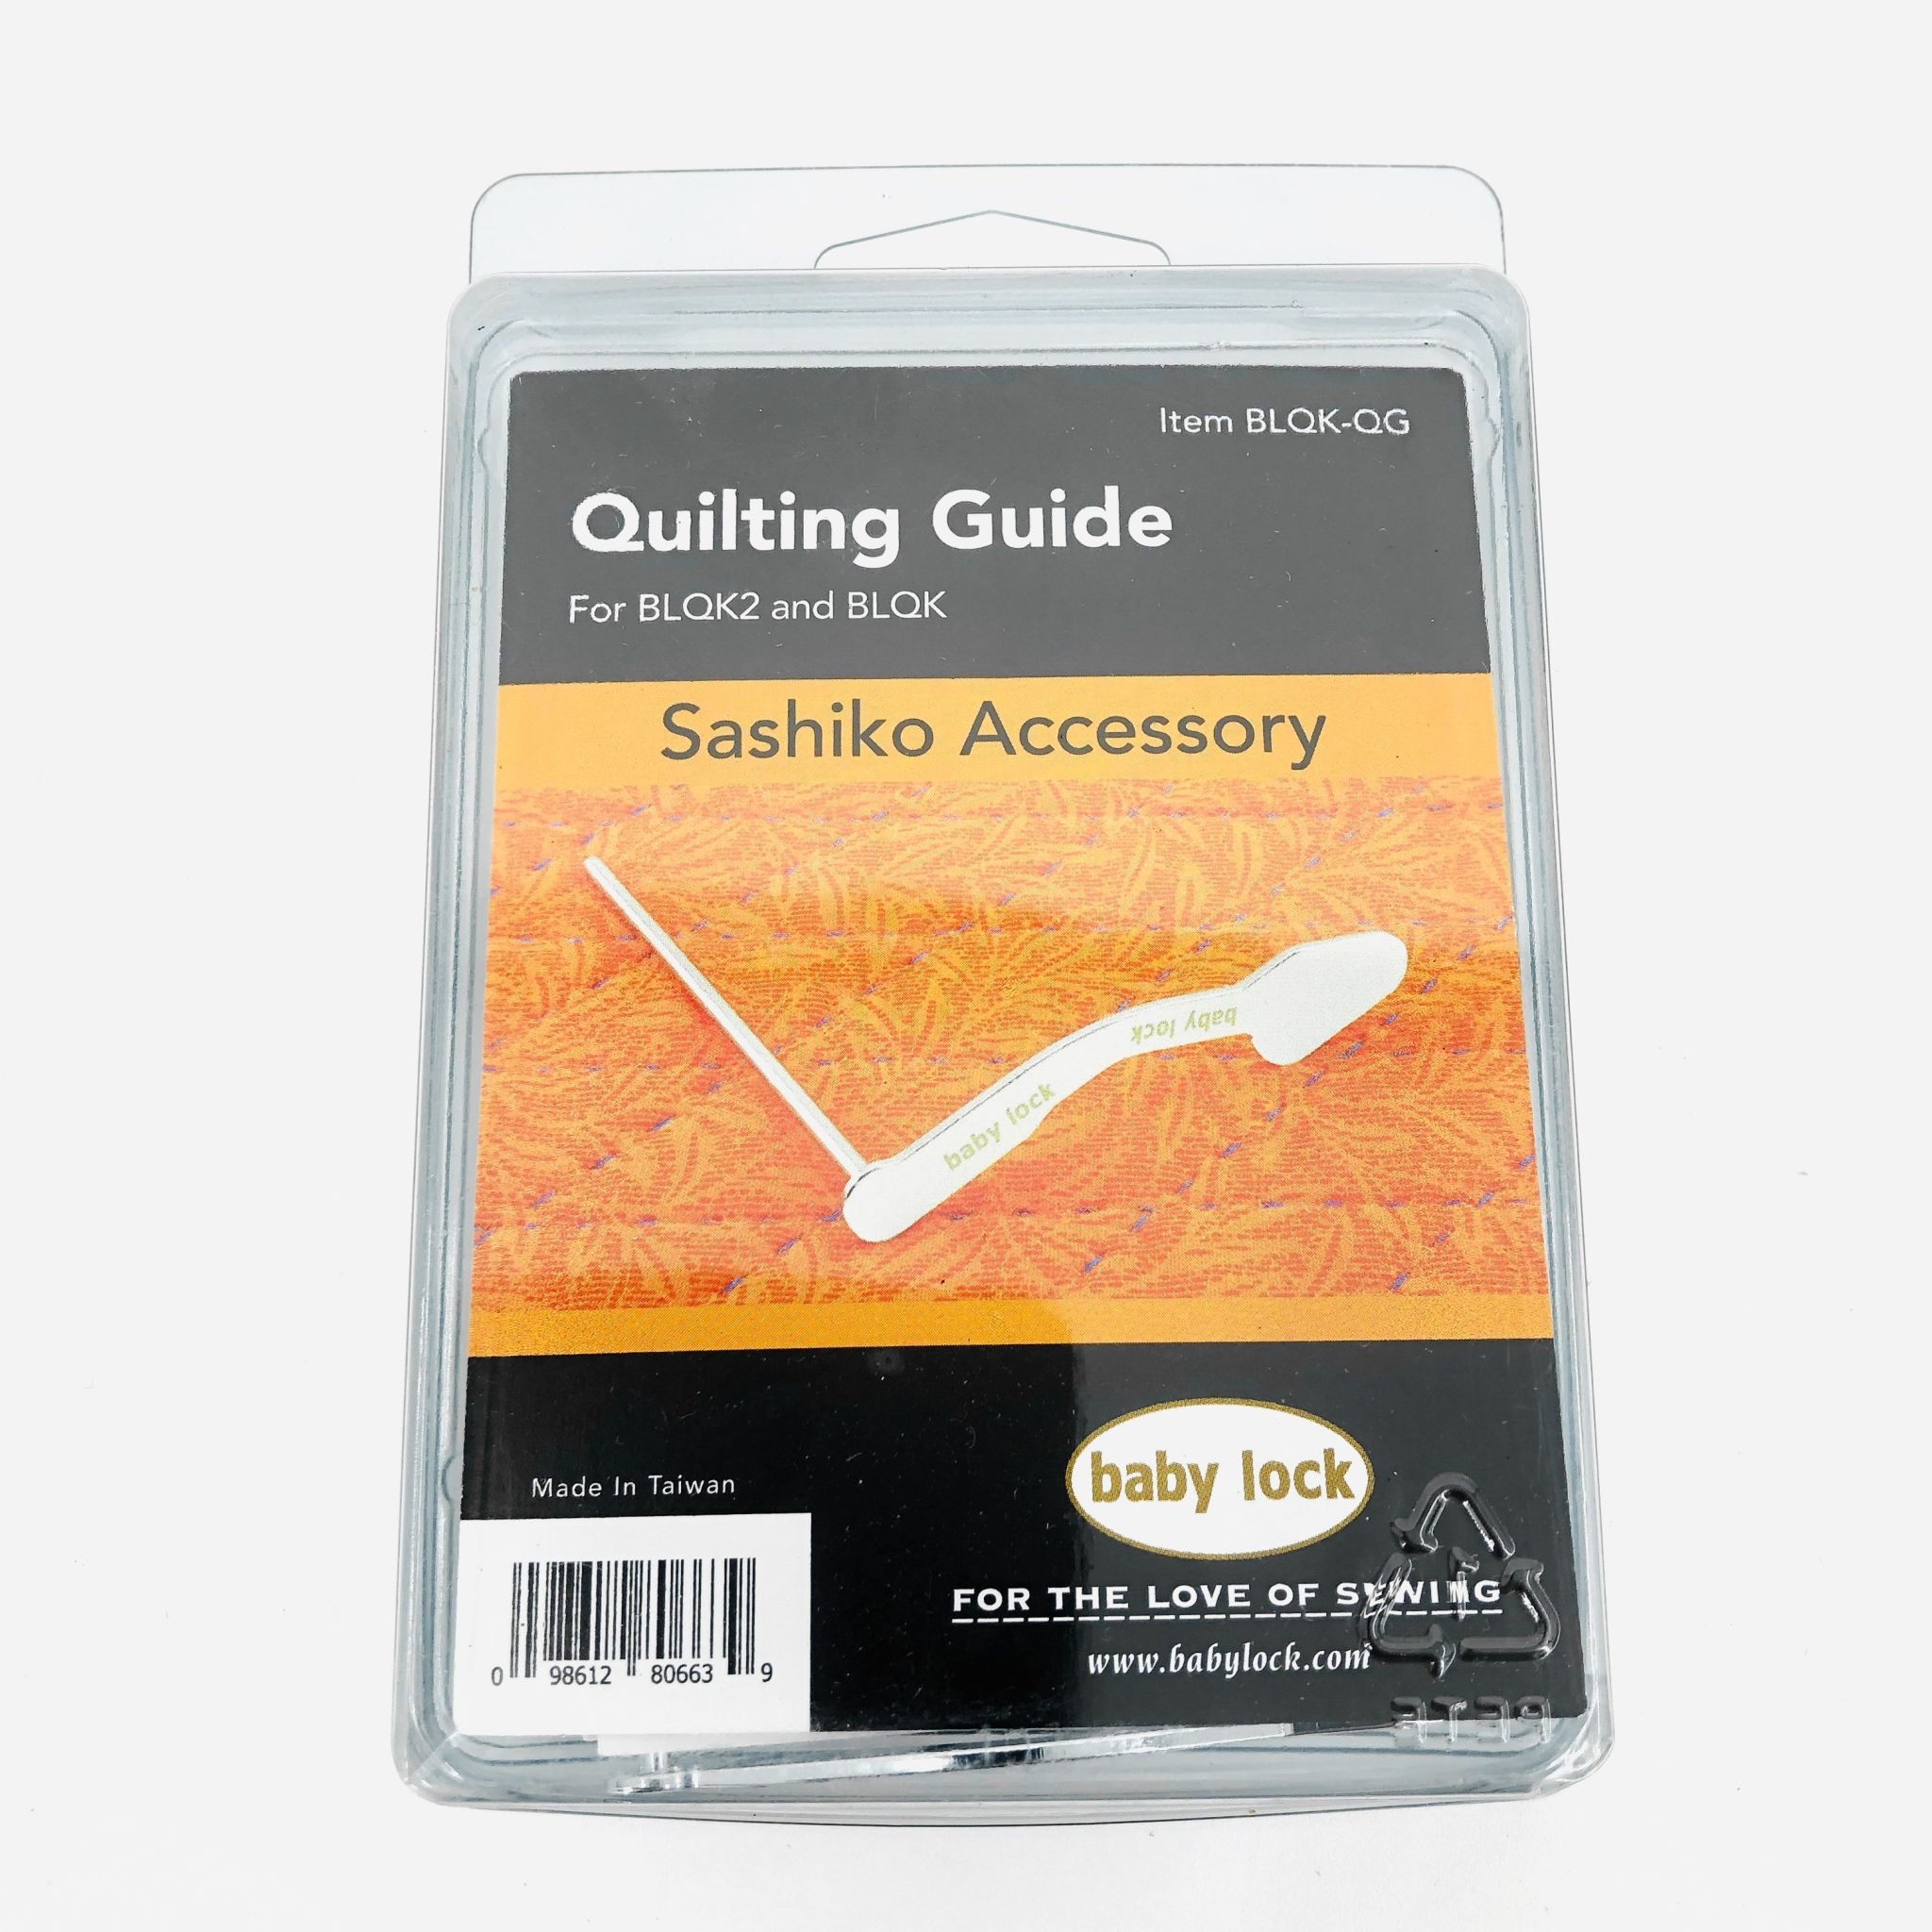 Baby Lock Baby Lock quilting guide for Sashiko